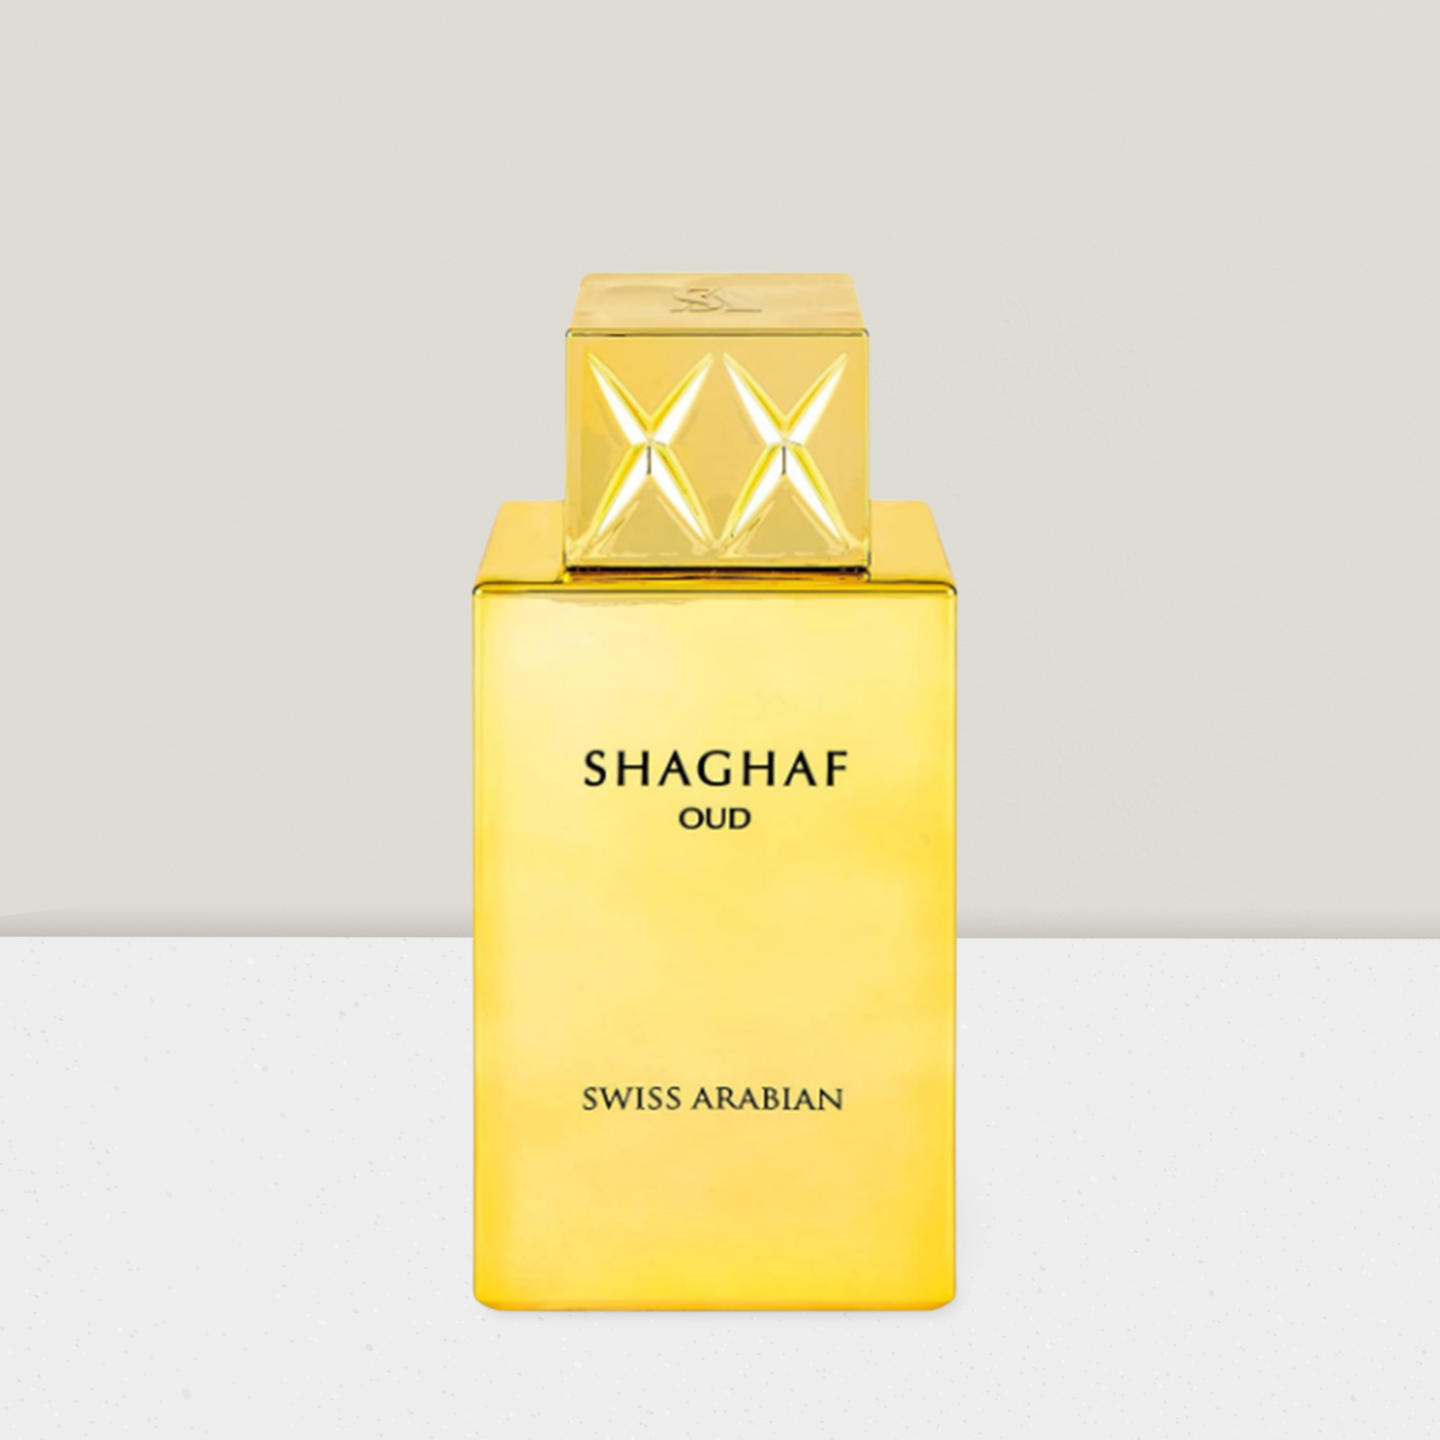 SWISS ARABIAN - Shaghaf Oud Duftprobe Parfümprobe Abfüllung